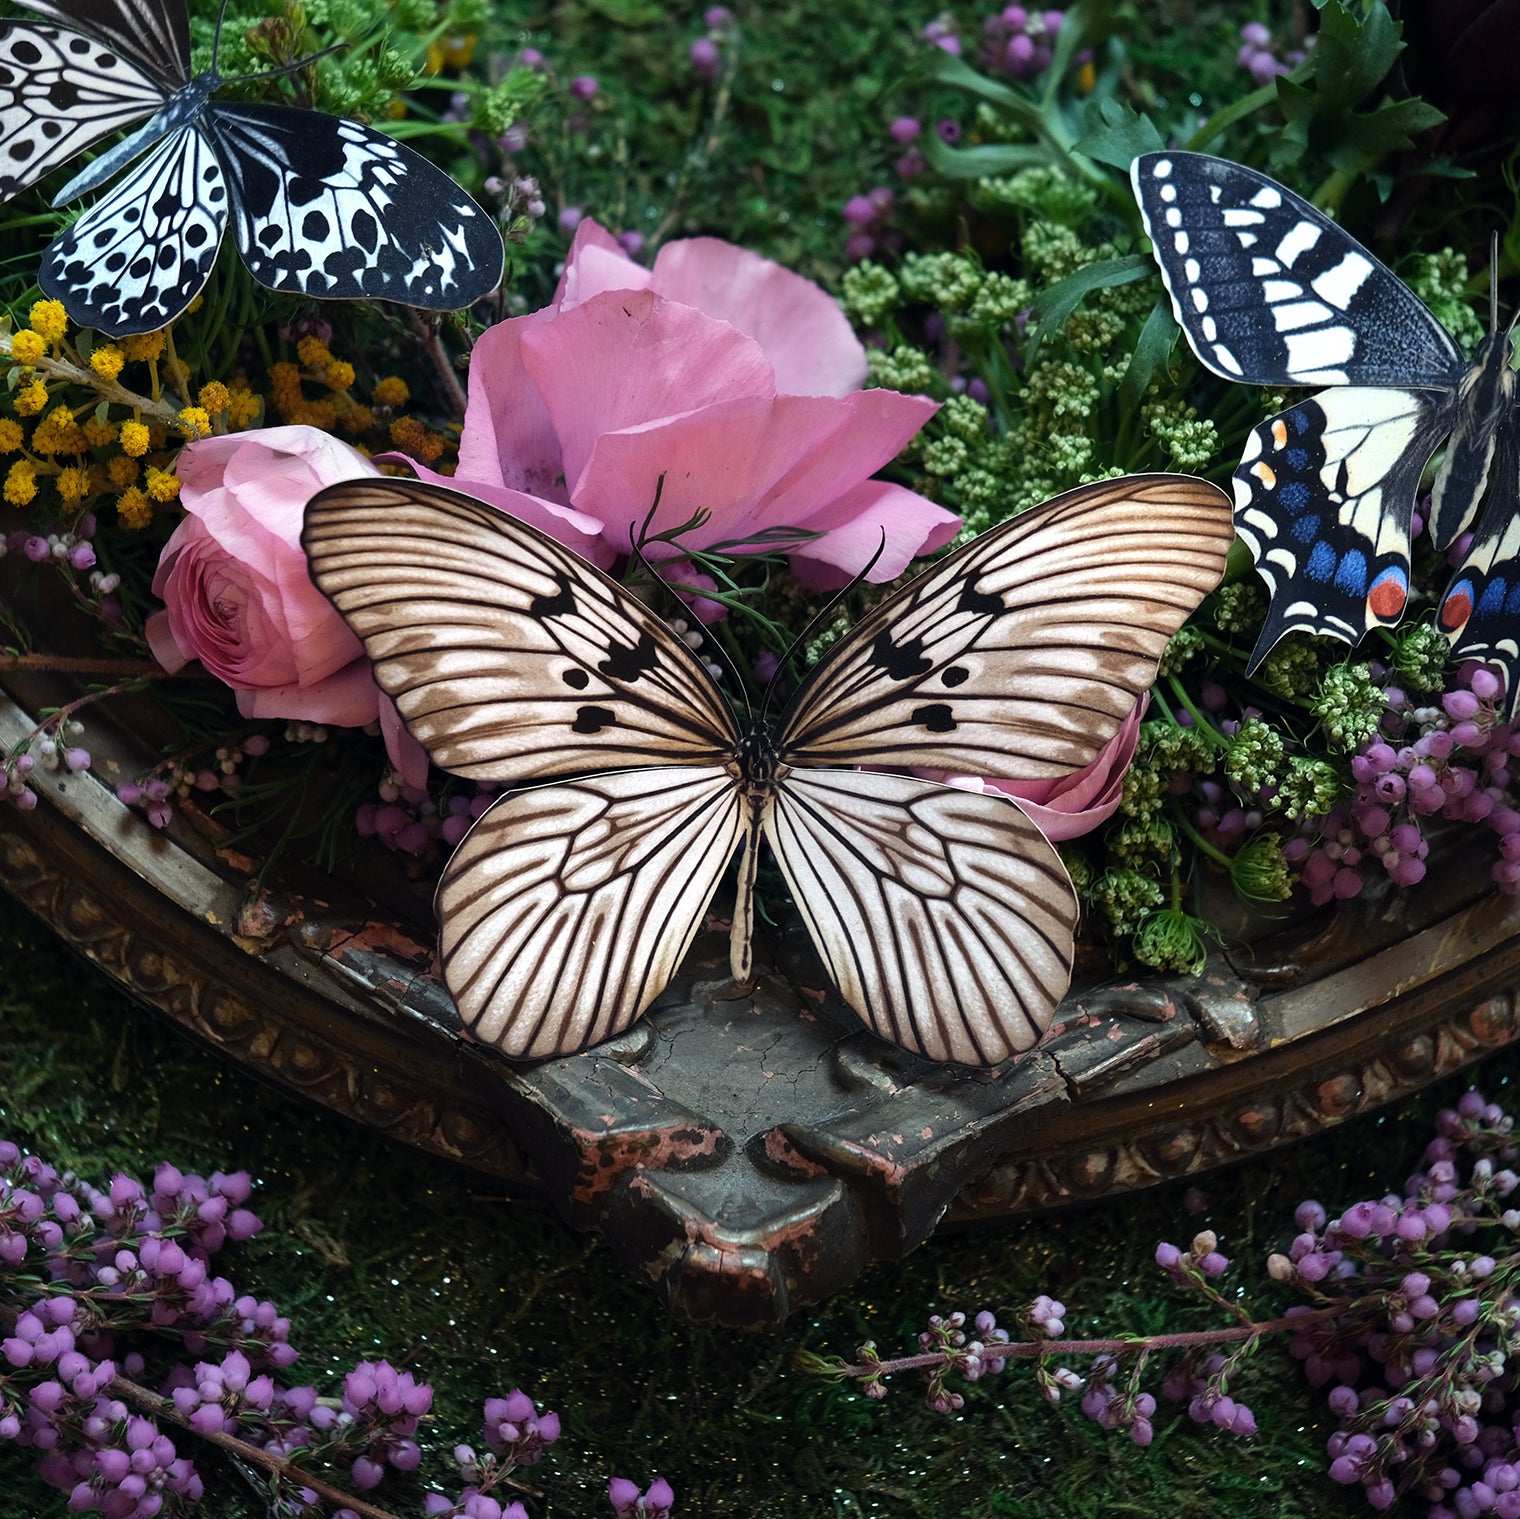 'Blanchard's Ghost' Butterfly